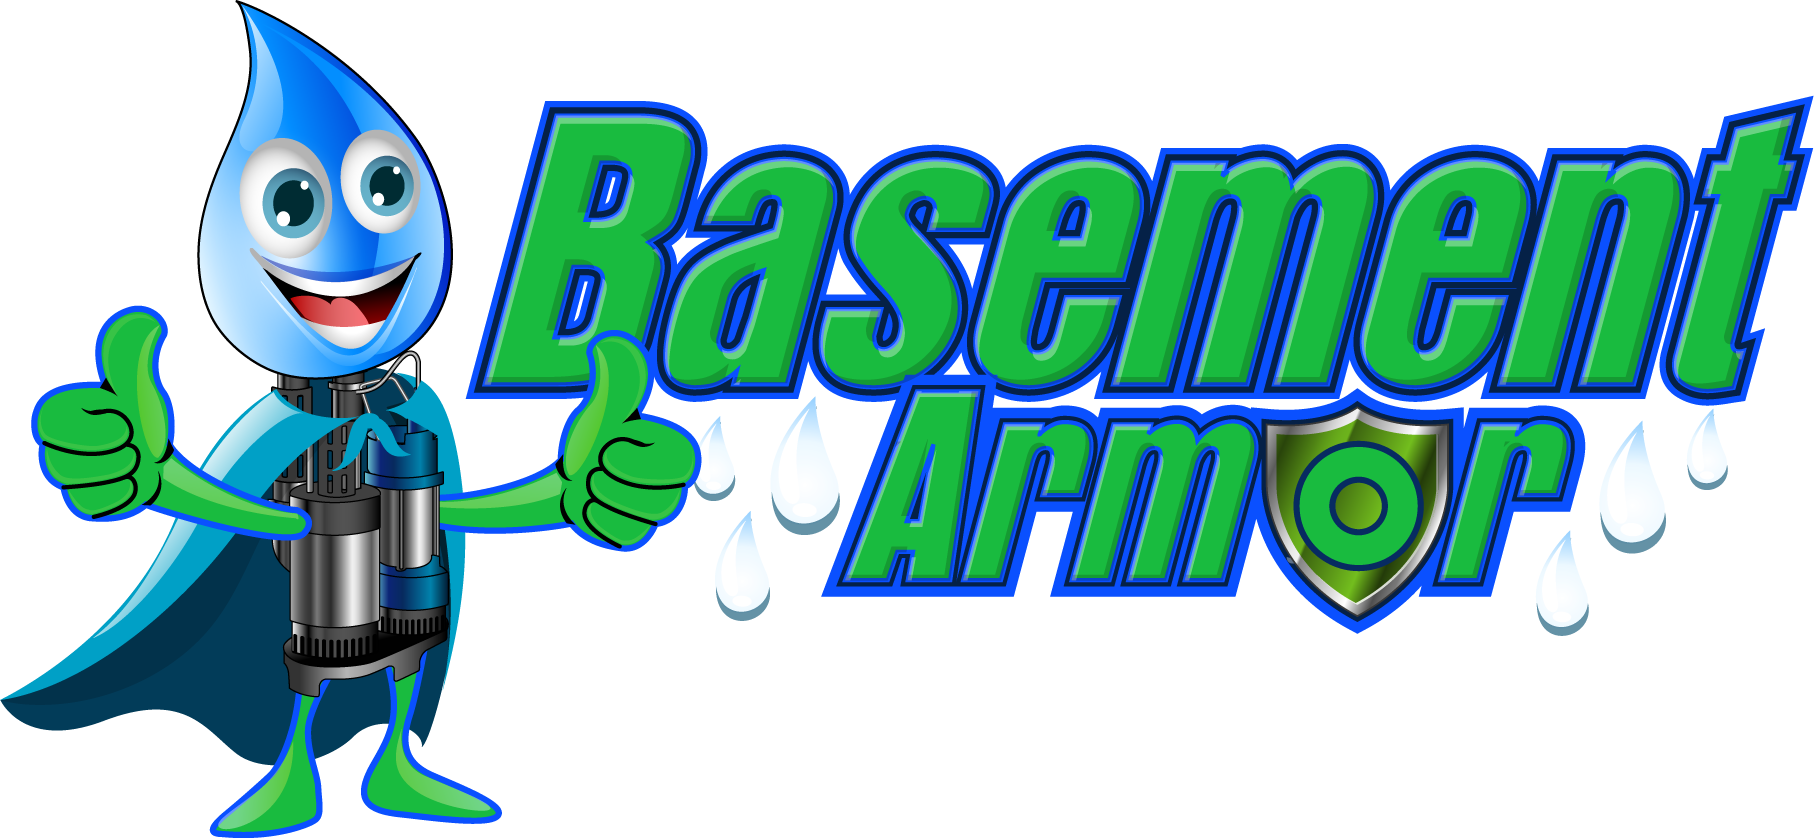 Basement Armor, LLC Logo